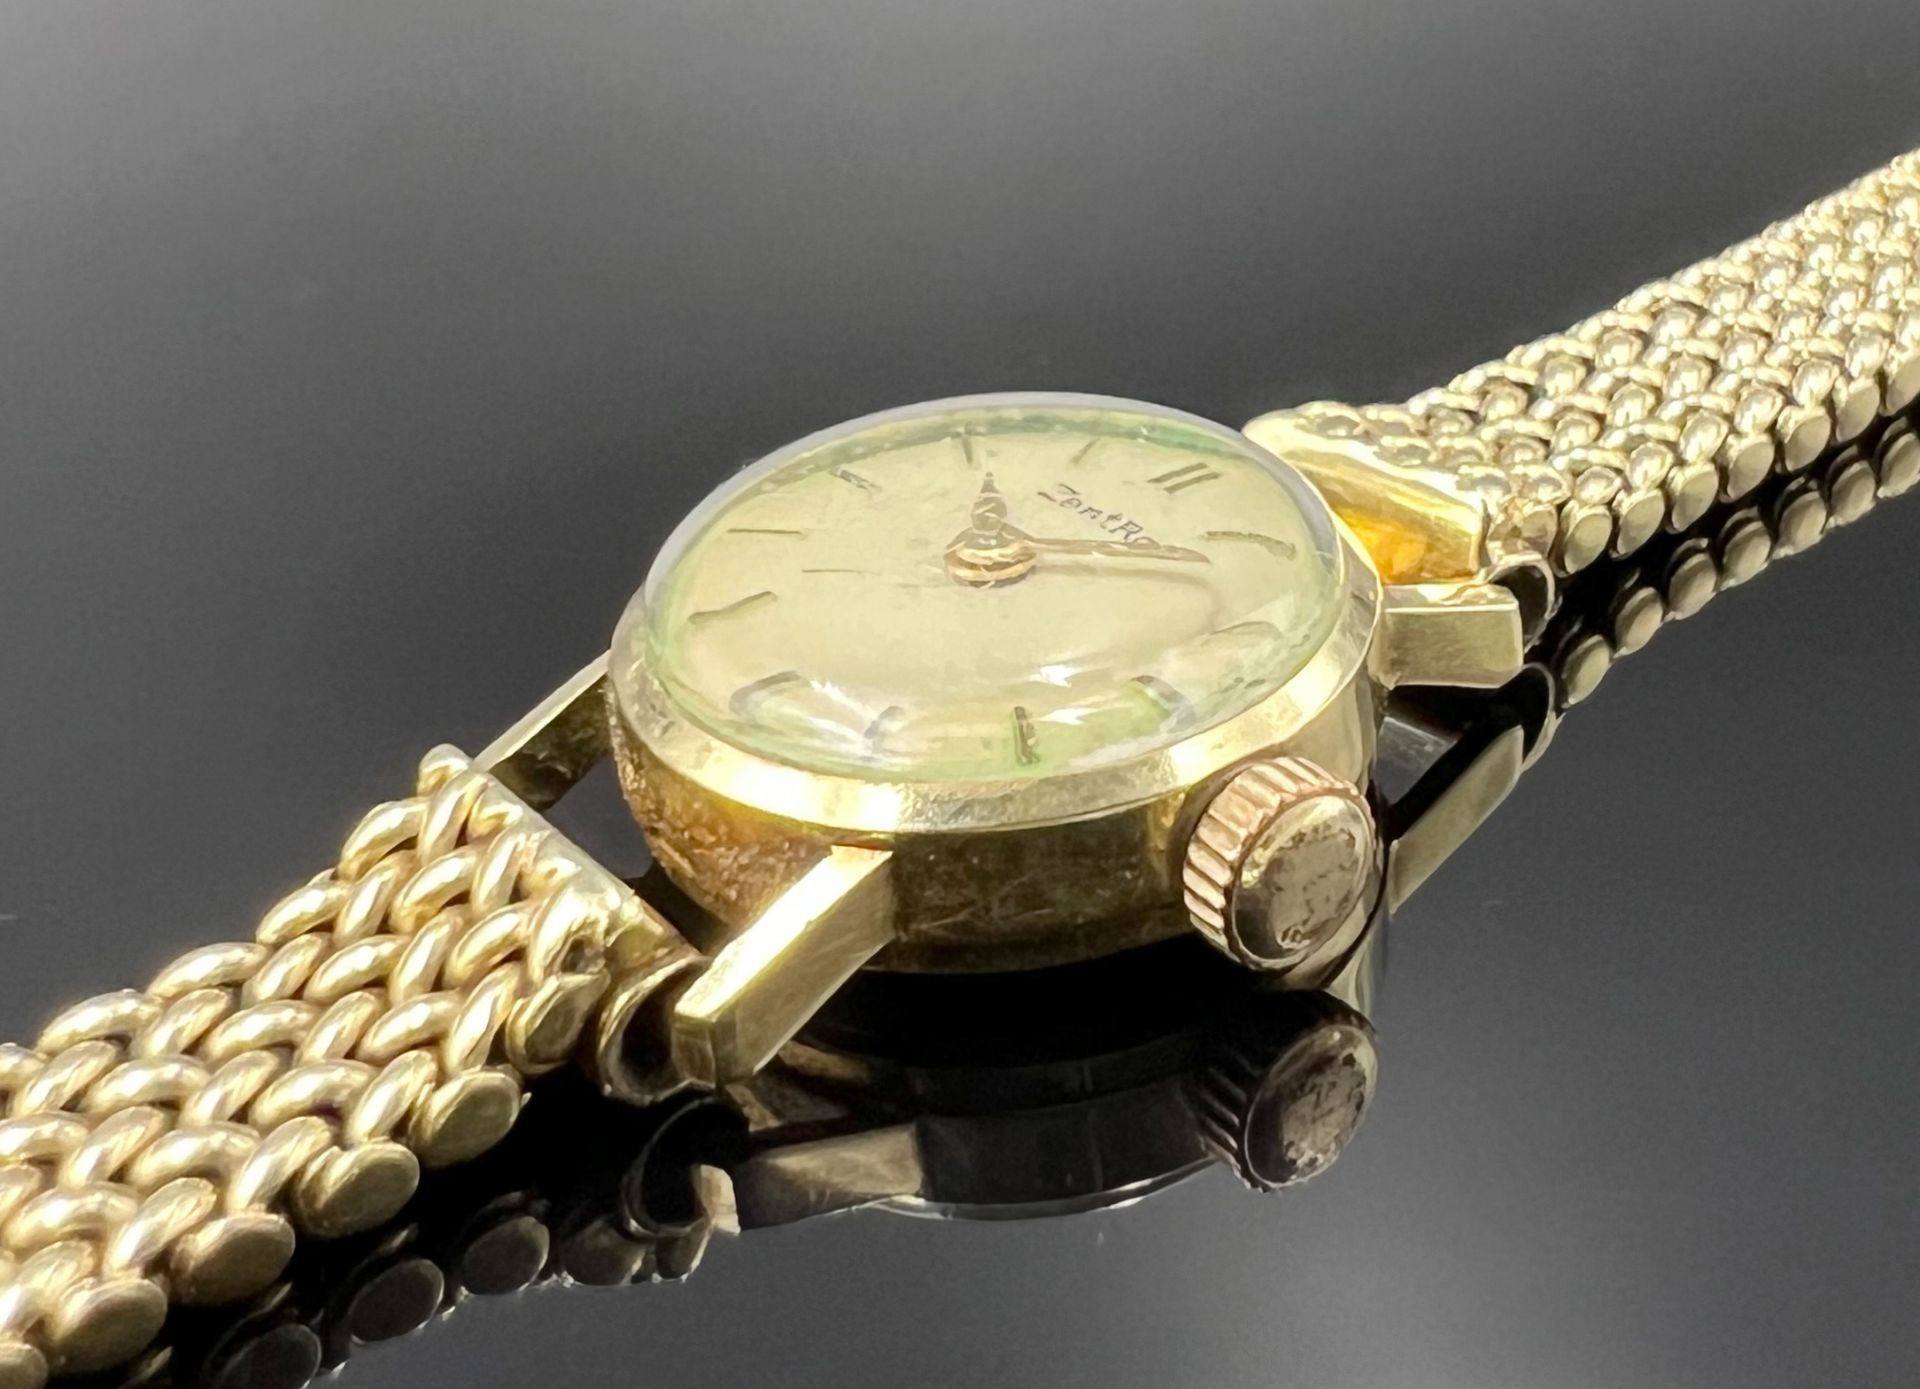 Ladies' wristwatch ZENTRA 585 yellow gold. 1960s. - Image 3 of 6